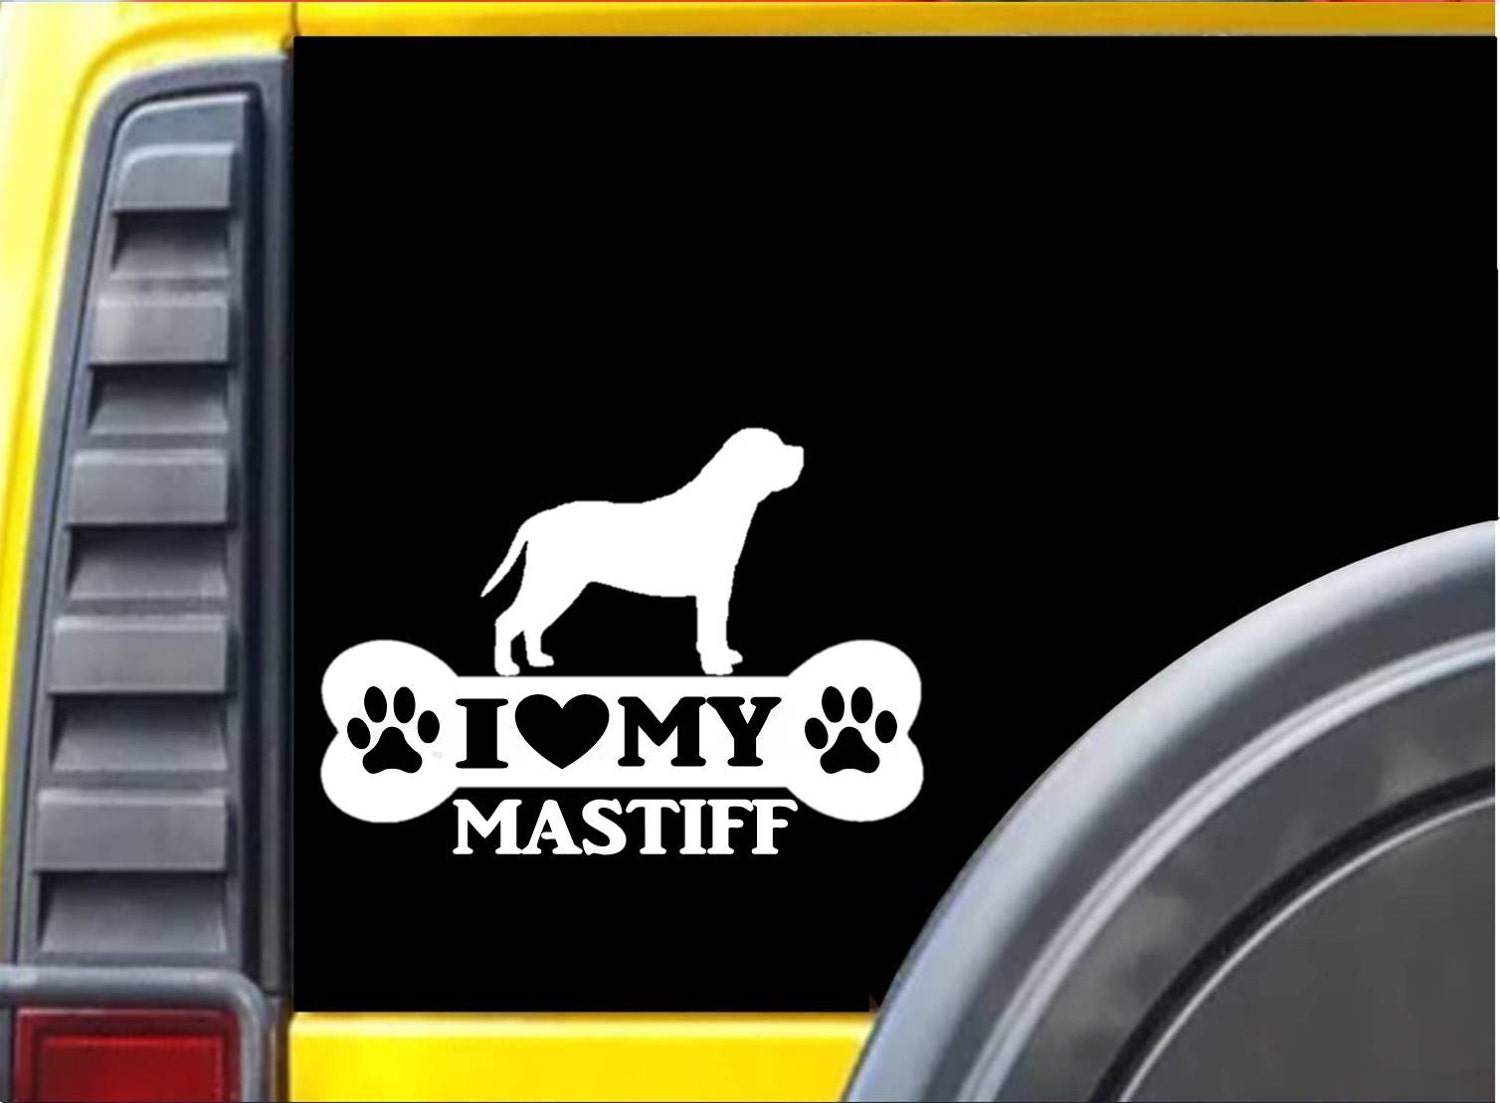 Certified Mastiff L303 Dog Sticker 6" decal 